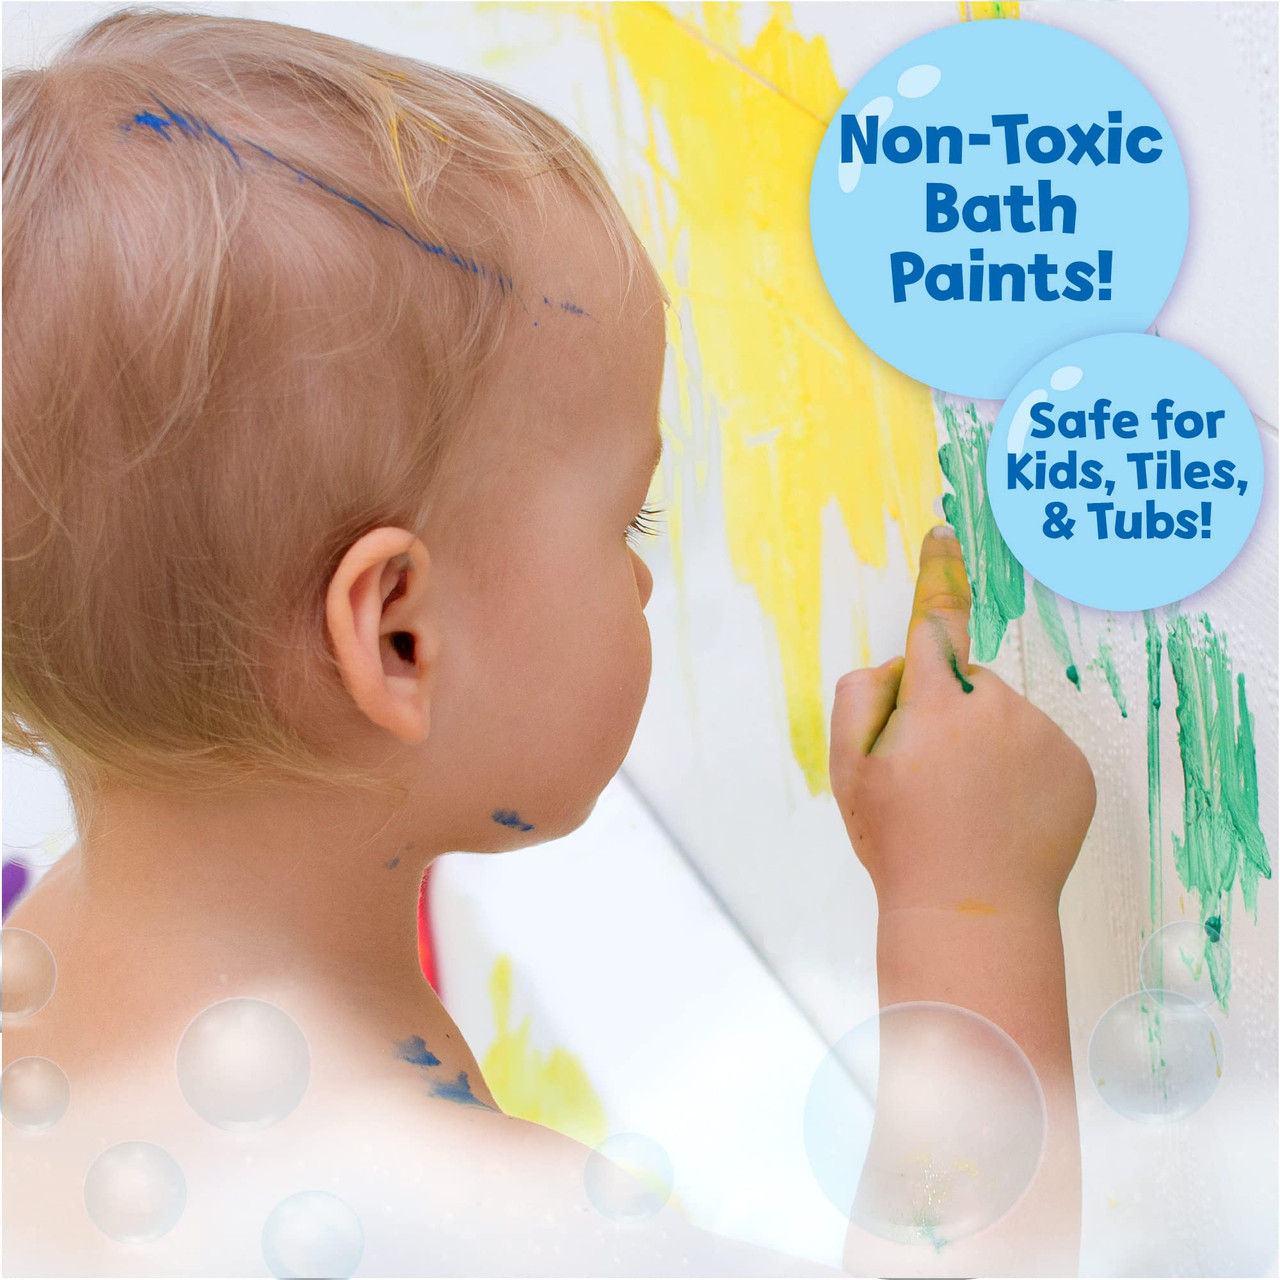 Baby Shark Bath Painting Playset, Dissolvable Finger Painting Bath Paints +  Reusable Poster, Bath Art Kit for Toddlers & Kids Ages 3, 4, 5, 6